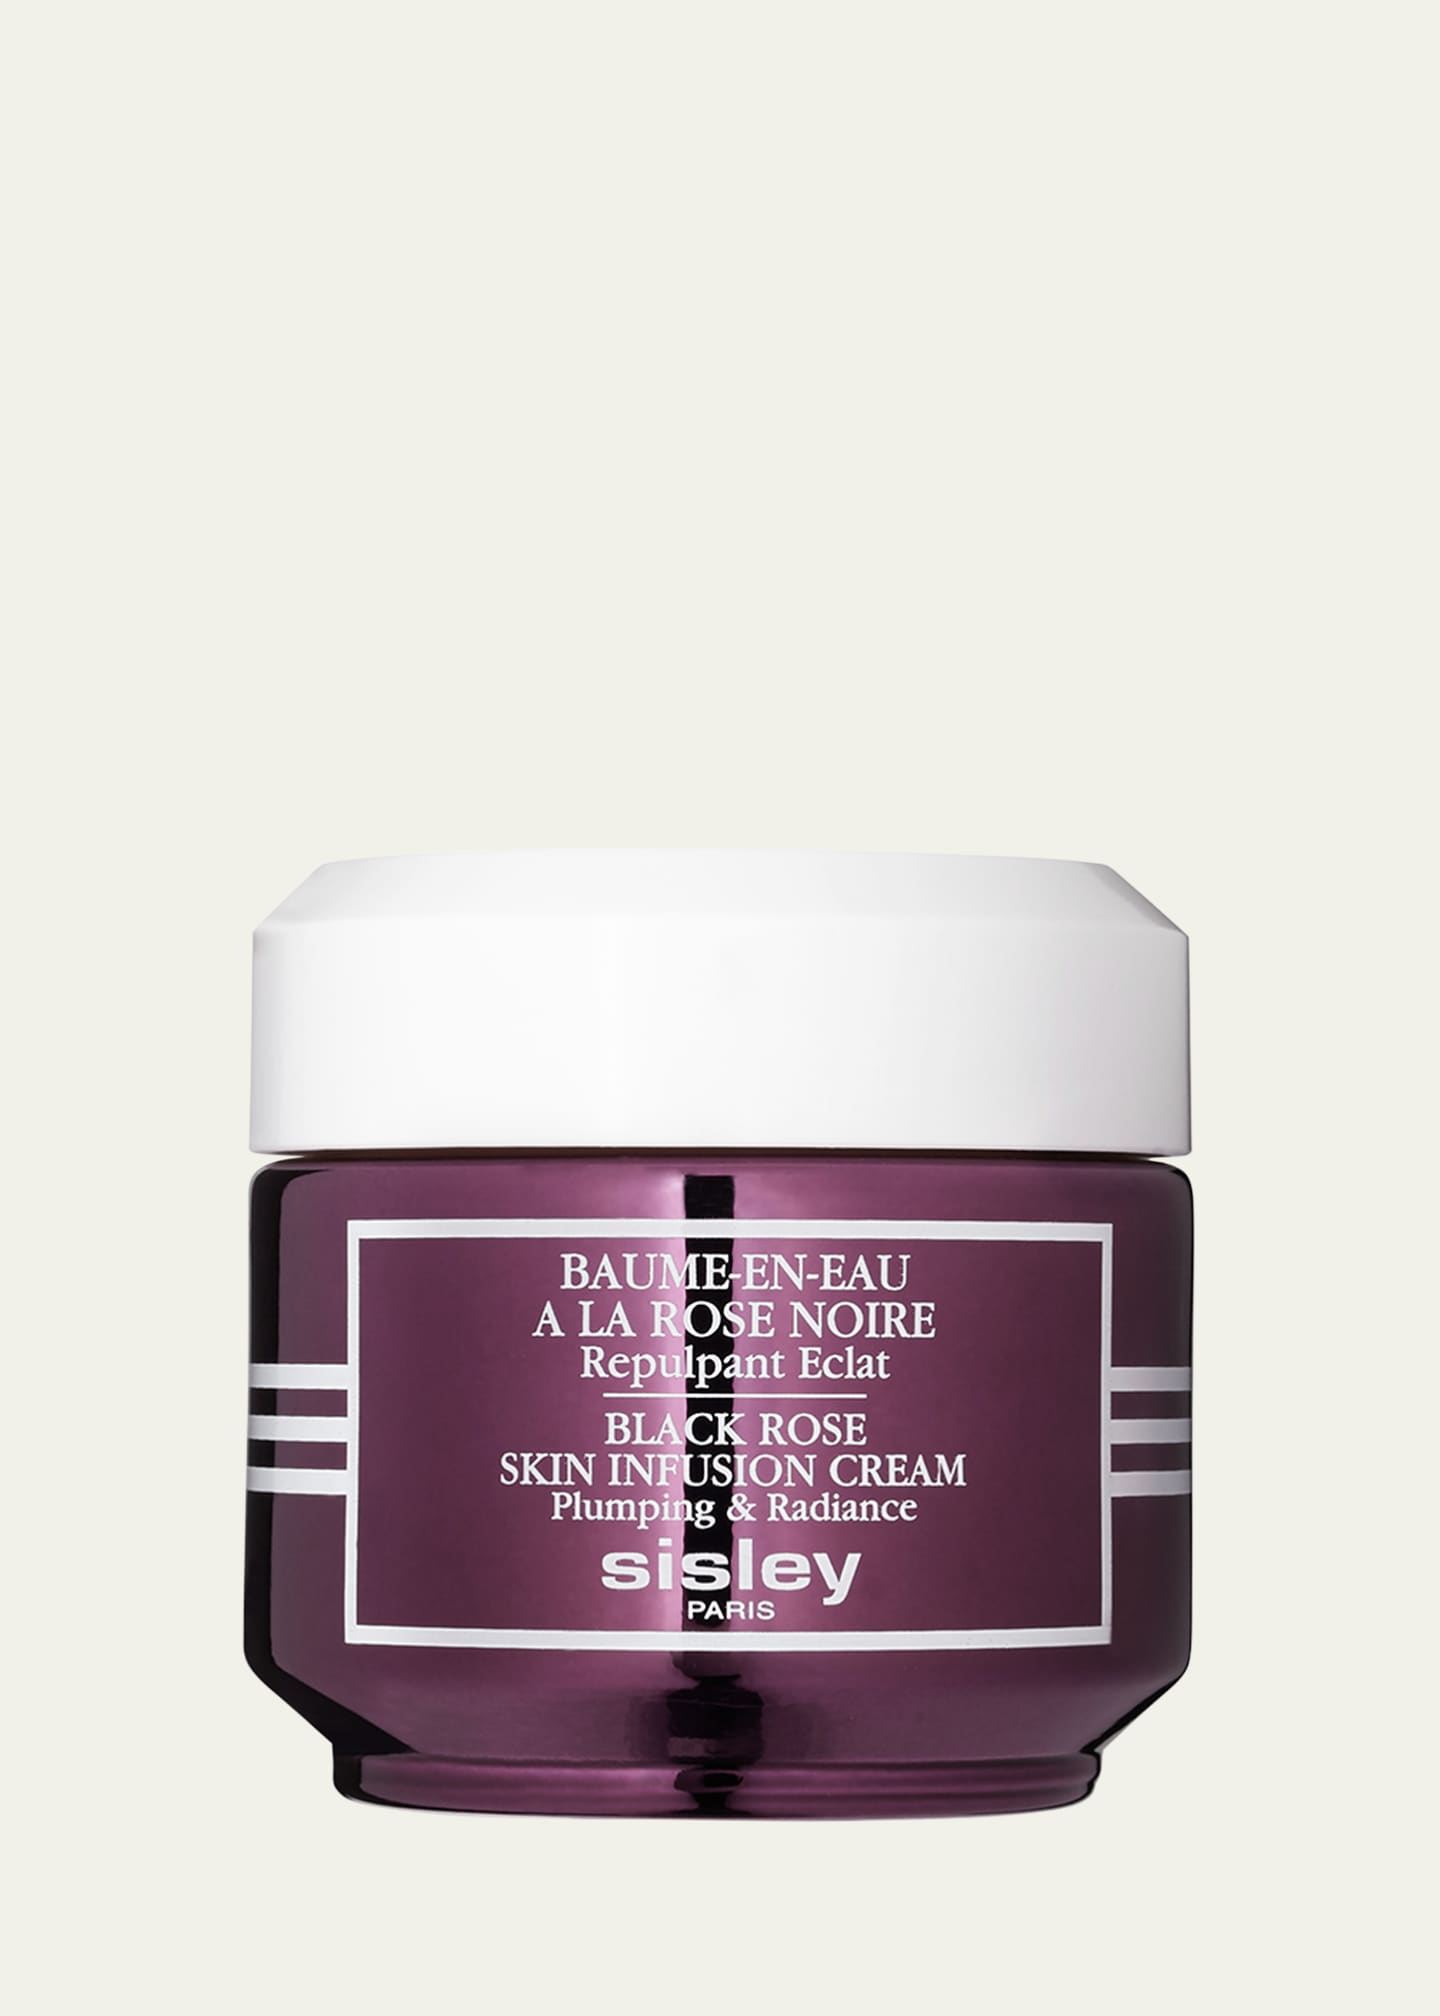 Sisley-Paris Black Rose Skin Infusion Cream Image 1 of 4